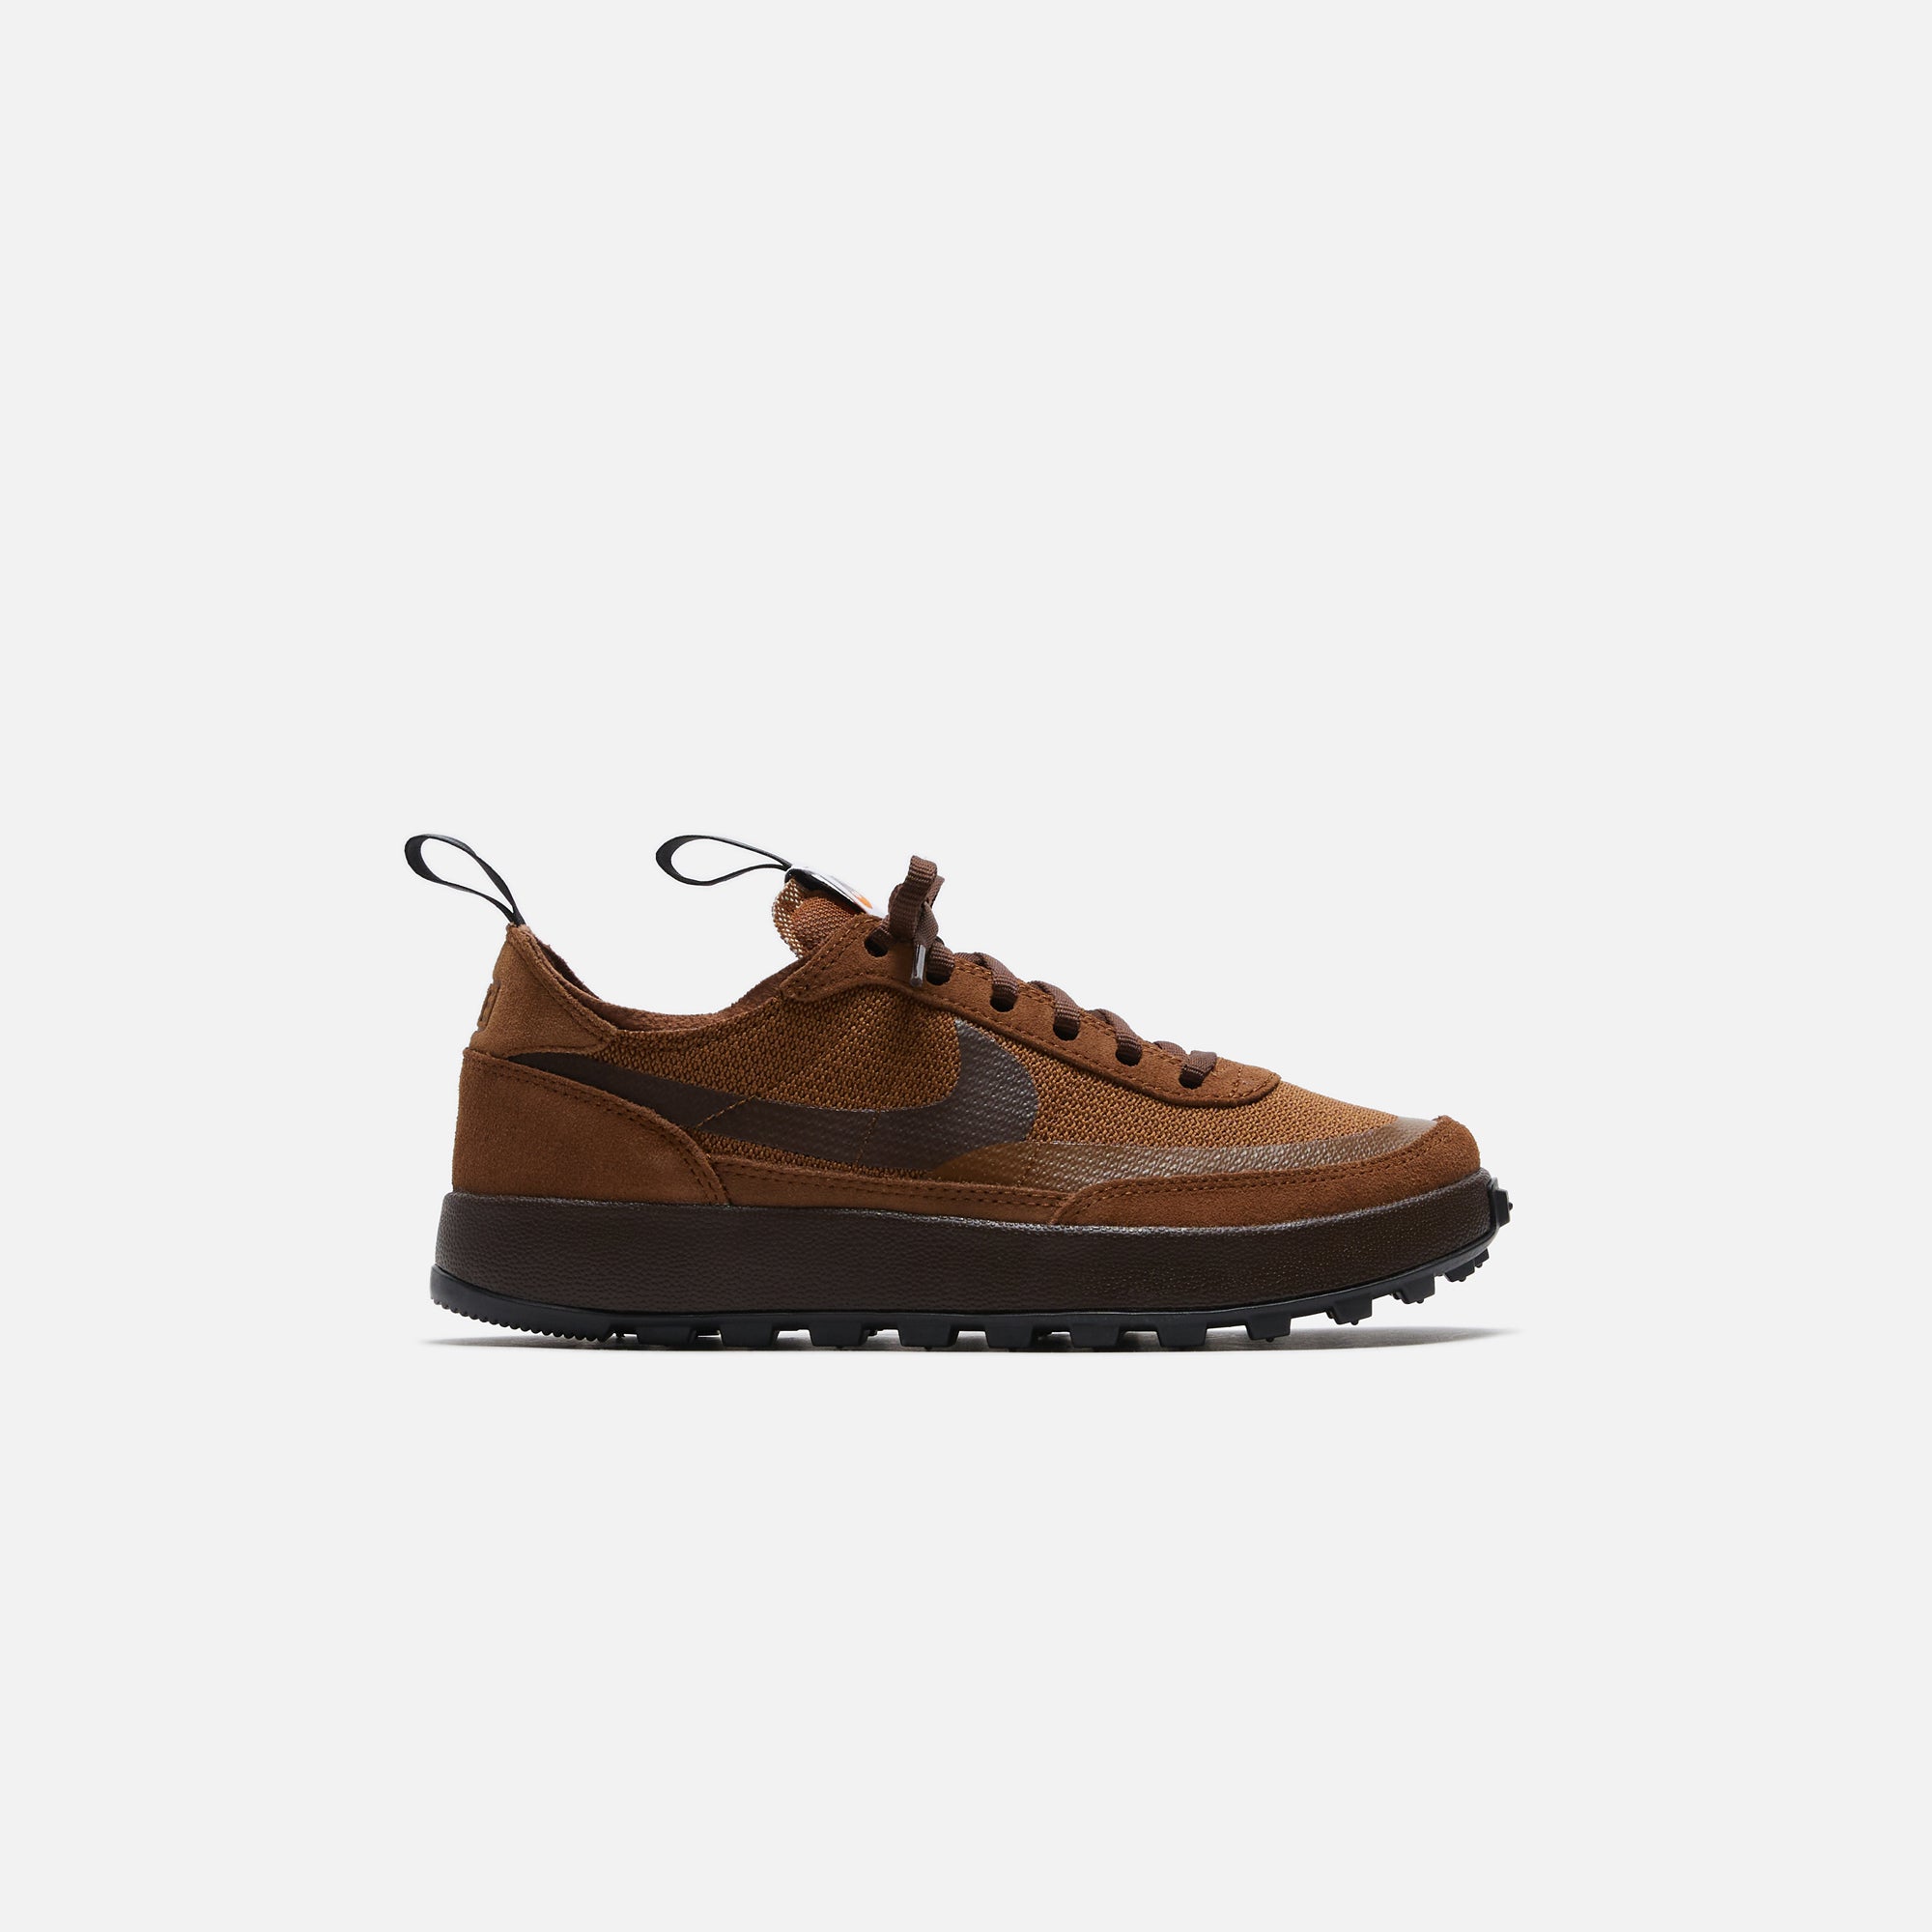 Nike x Tom Sachs WMNS General Purpose Shoe - Pecan / Dark Field 